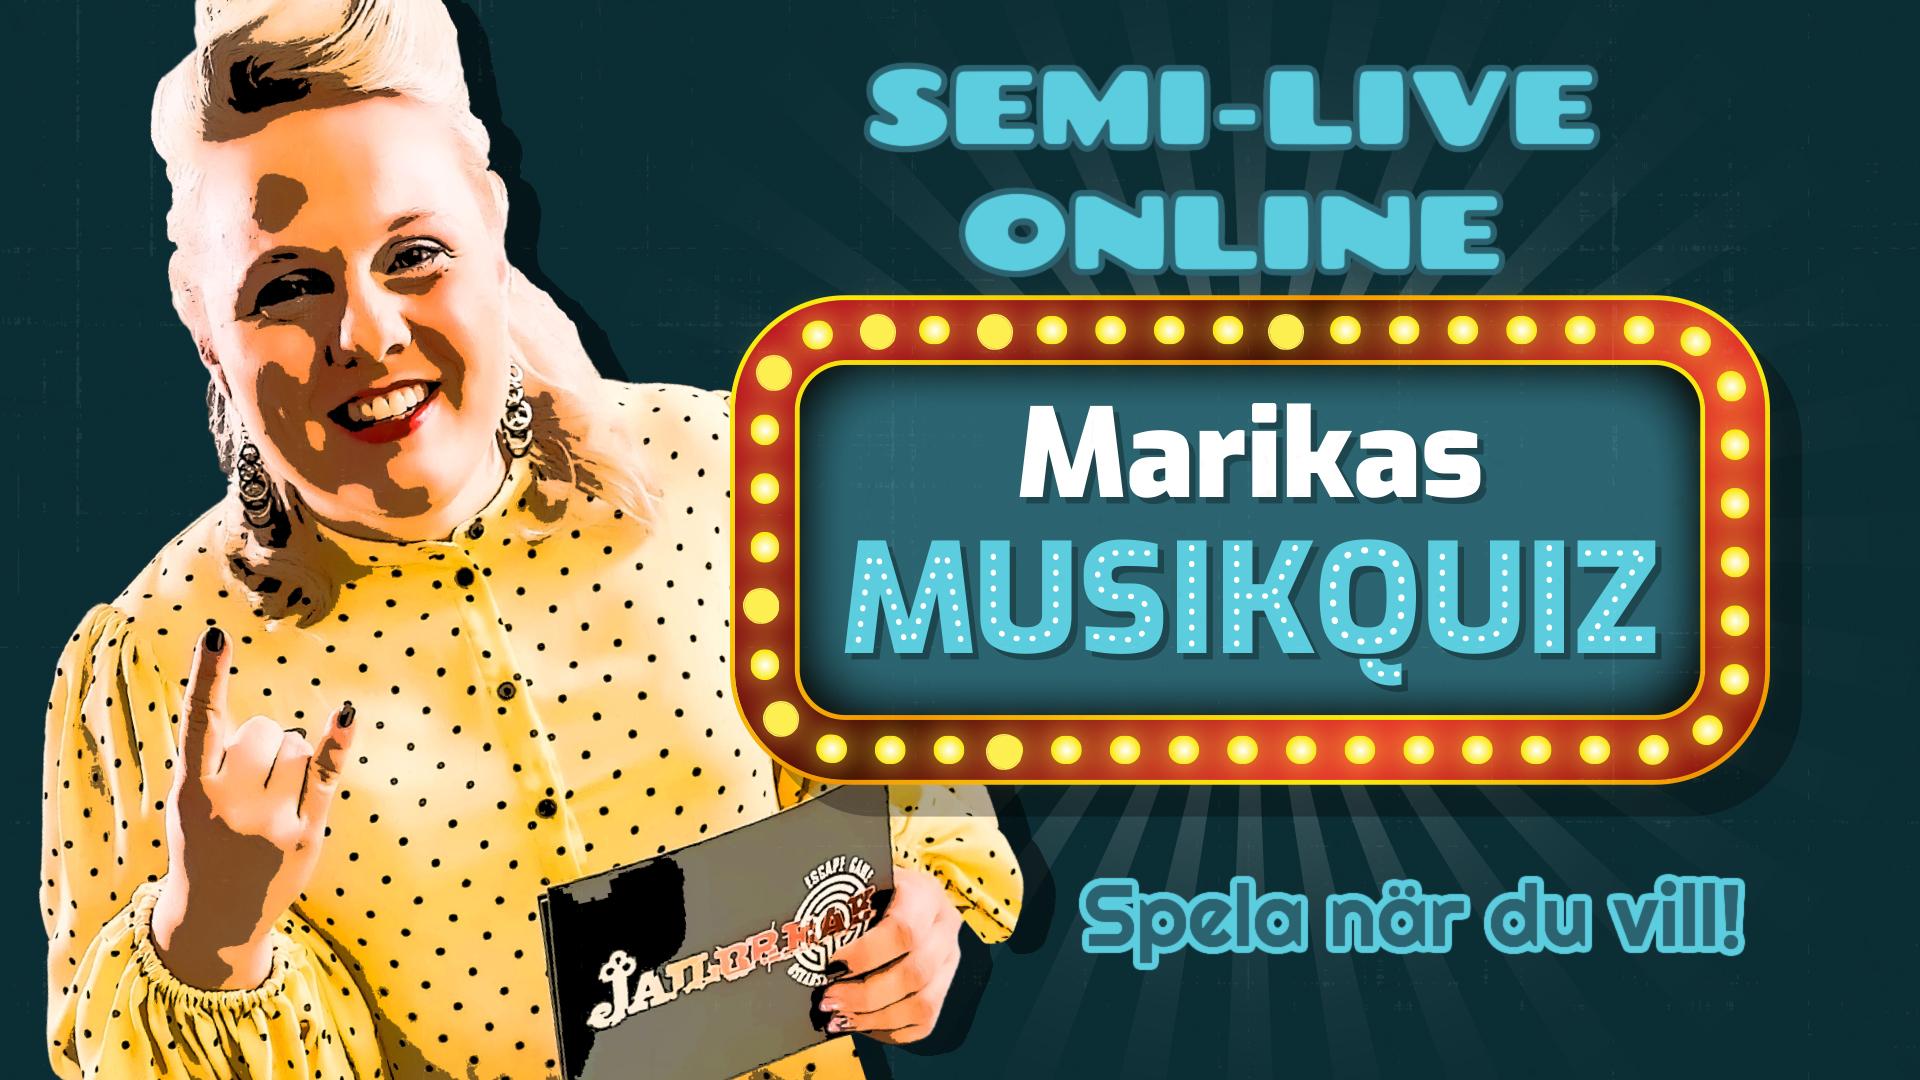 Musikquiz semi-live online